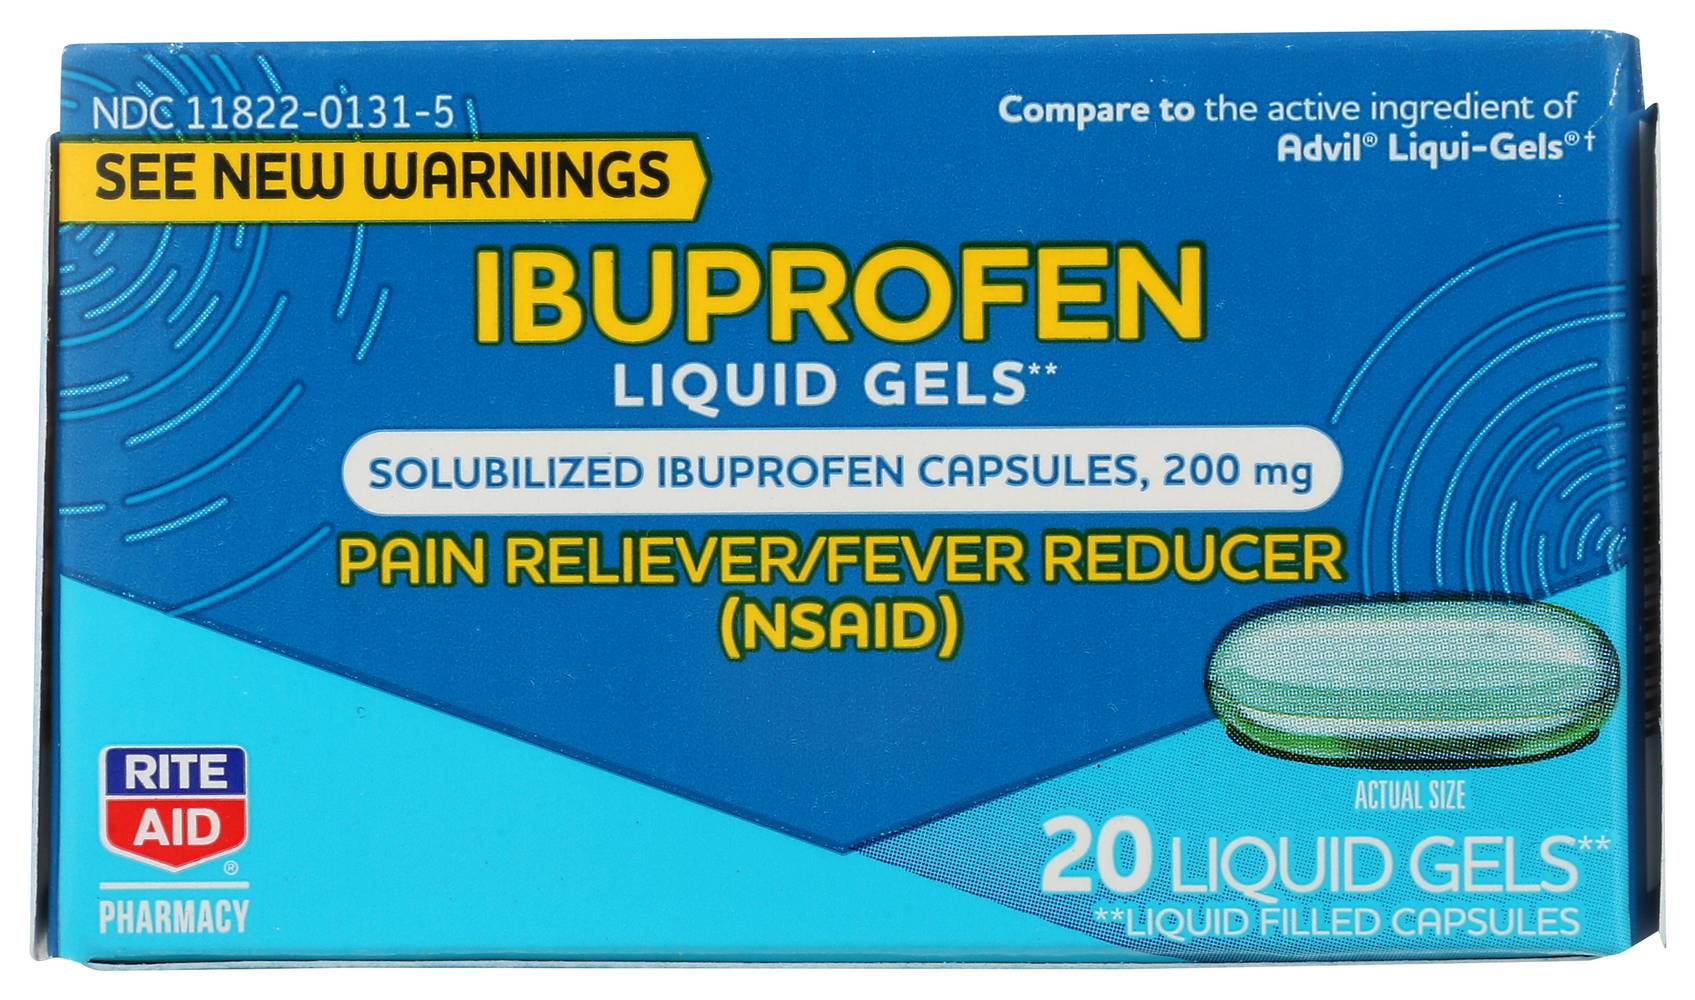 Rite Aid Ibuprofen Liquid Gels 200mg (20 ct)